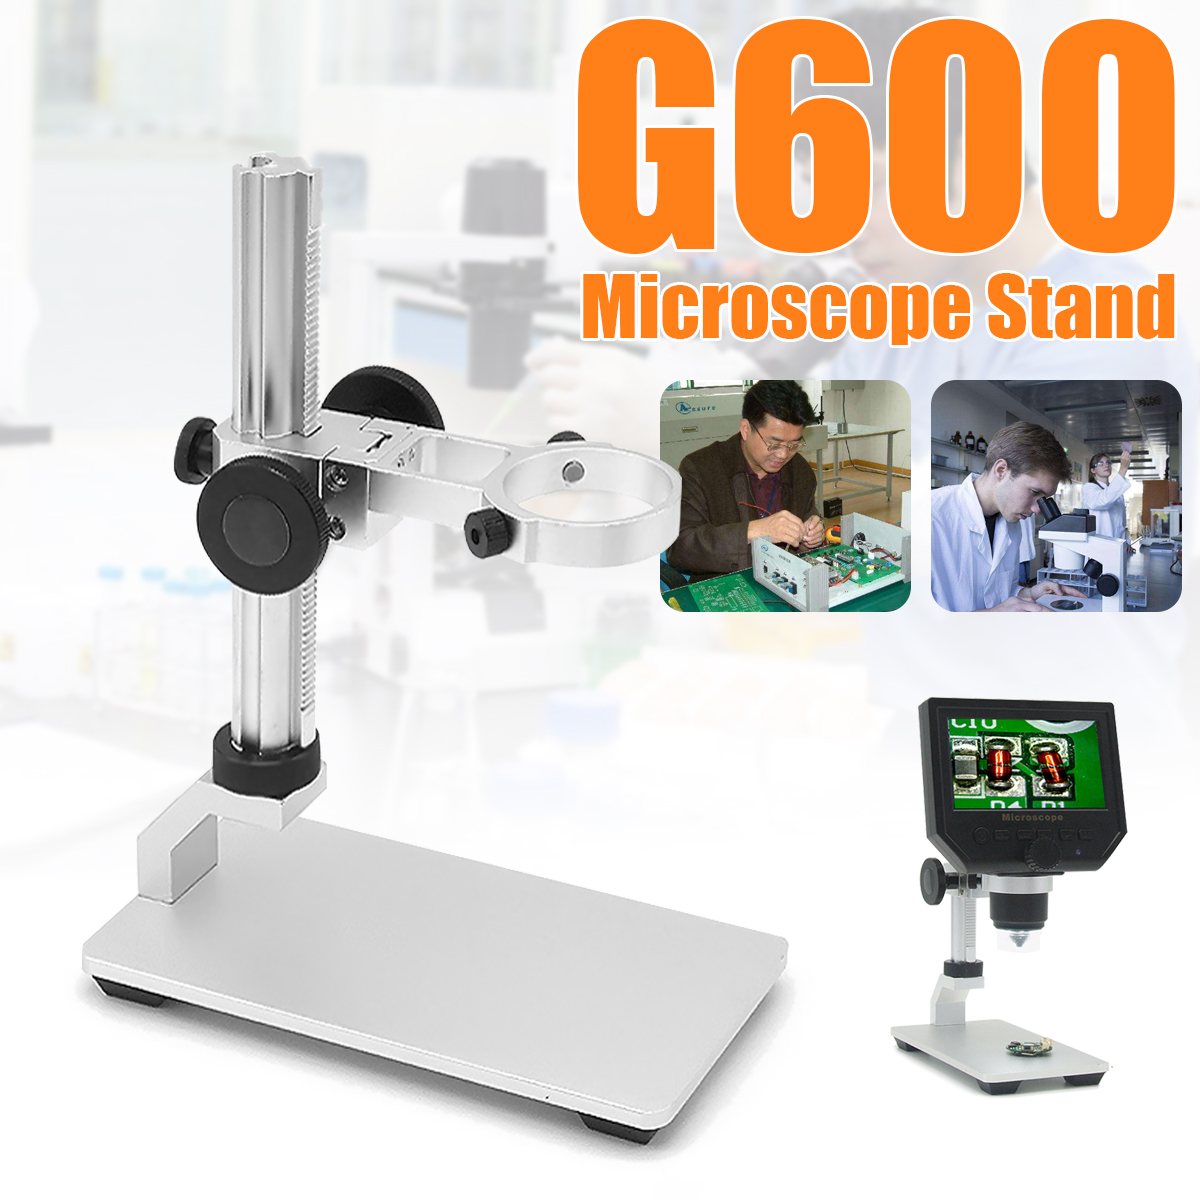 Aluminum-Alloy-Stand-Bracket-Holder-Microscope-Holder-for-Digital-Microscope-Suitable-for-Most-Model-1194155-1